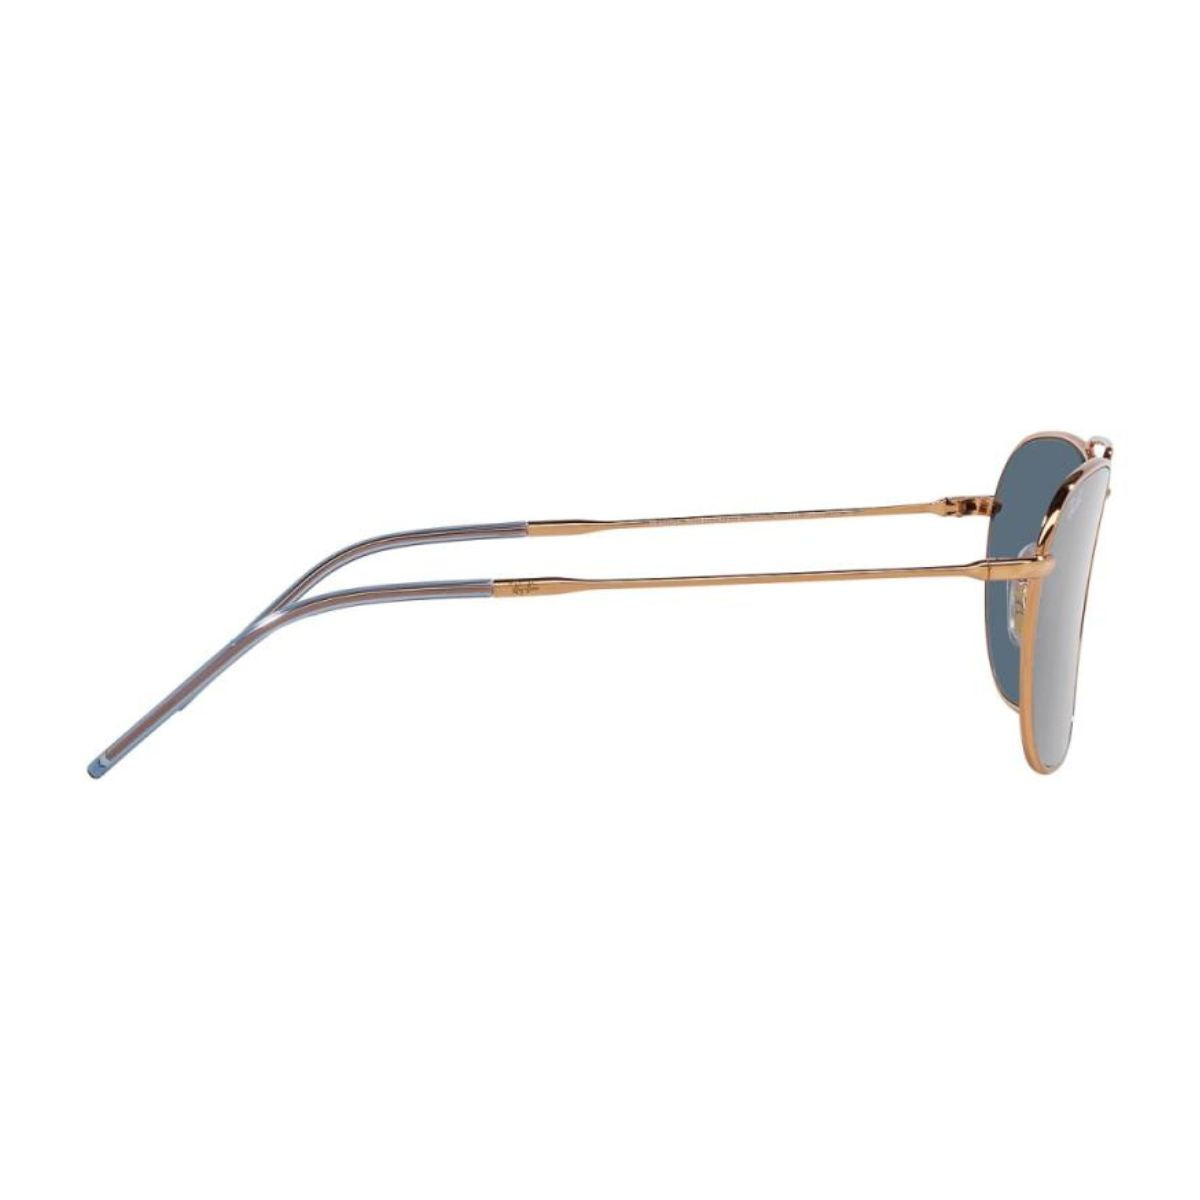 "Stylish Rayban 0102 9202/3a Unisex Sunglasses for UV Blocking Online At Optorium"